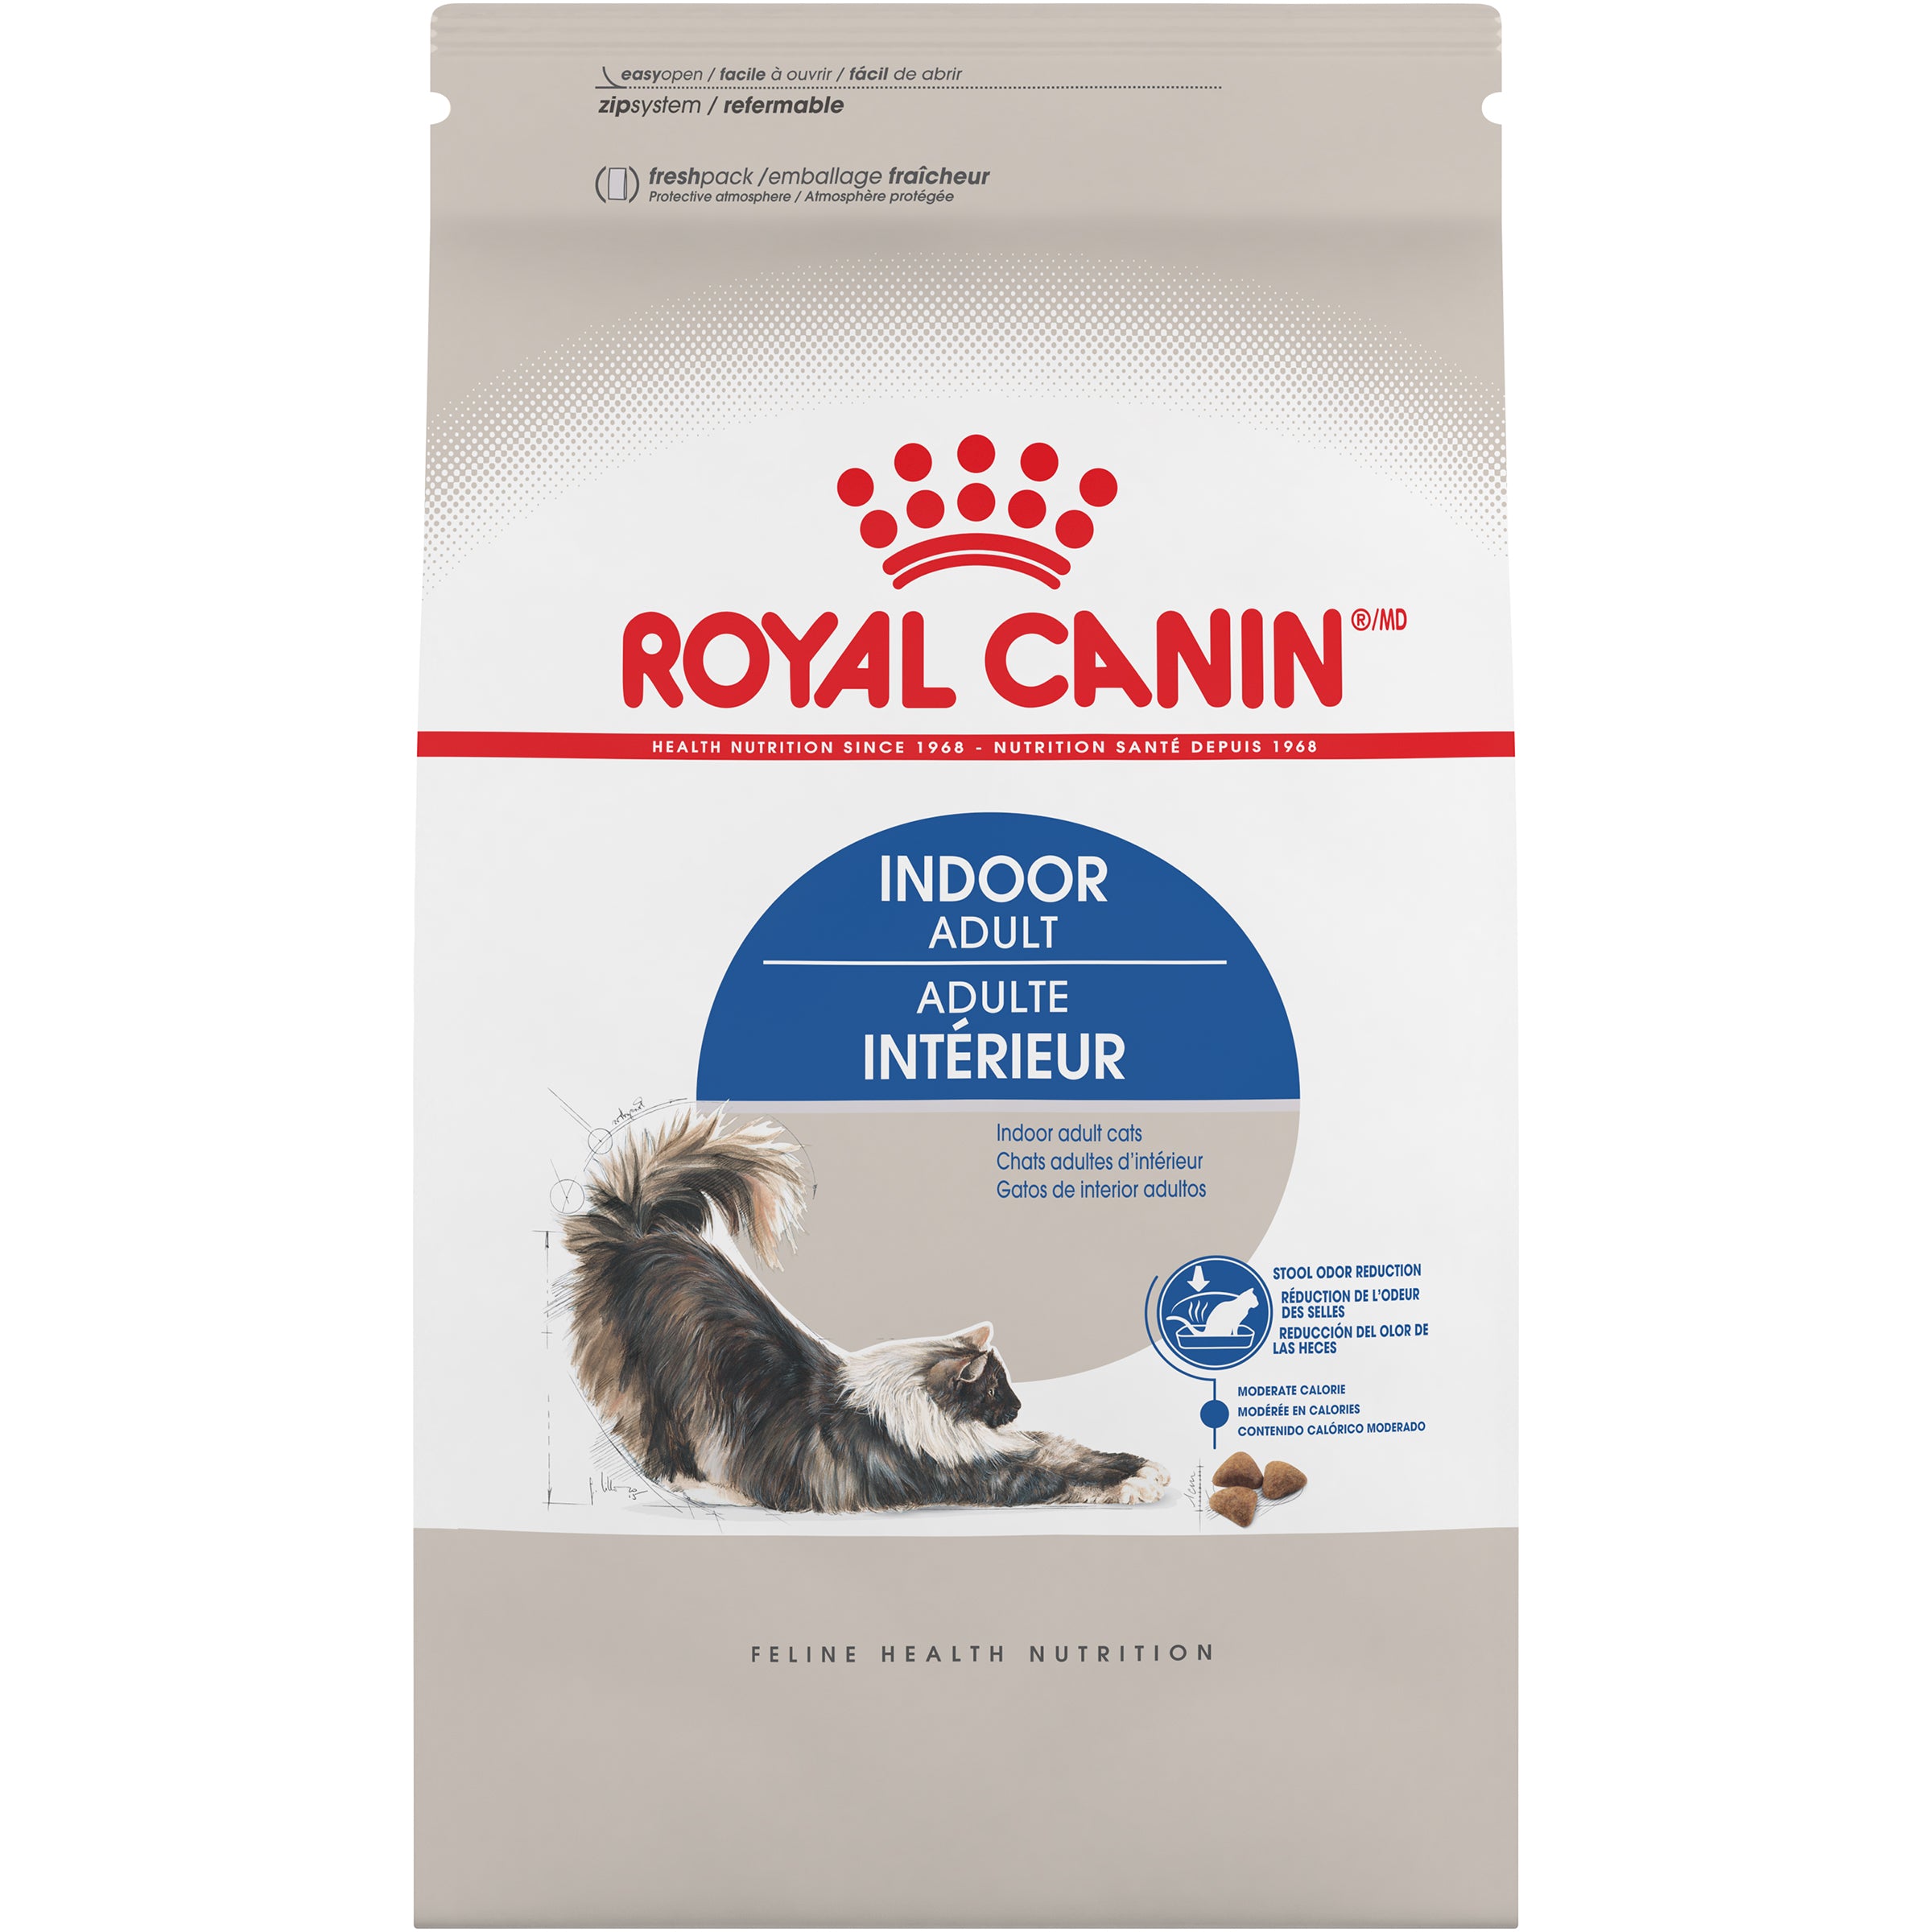 Royal Canin® Feline Health Nutrition™ Indoor Adult Dry Cat Food, 15 lb